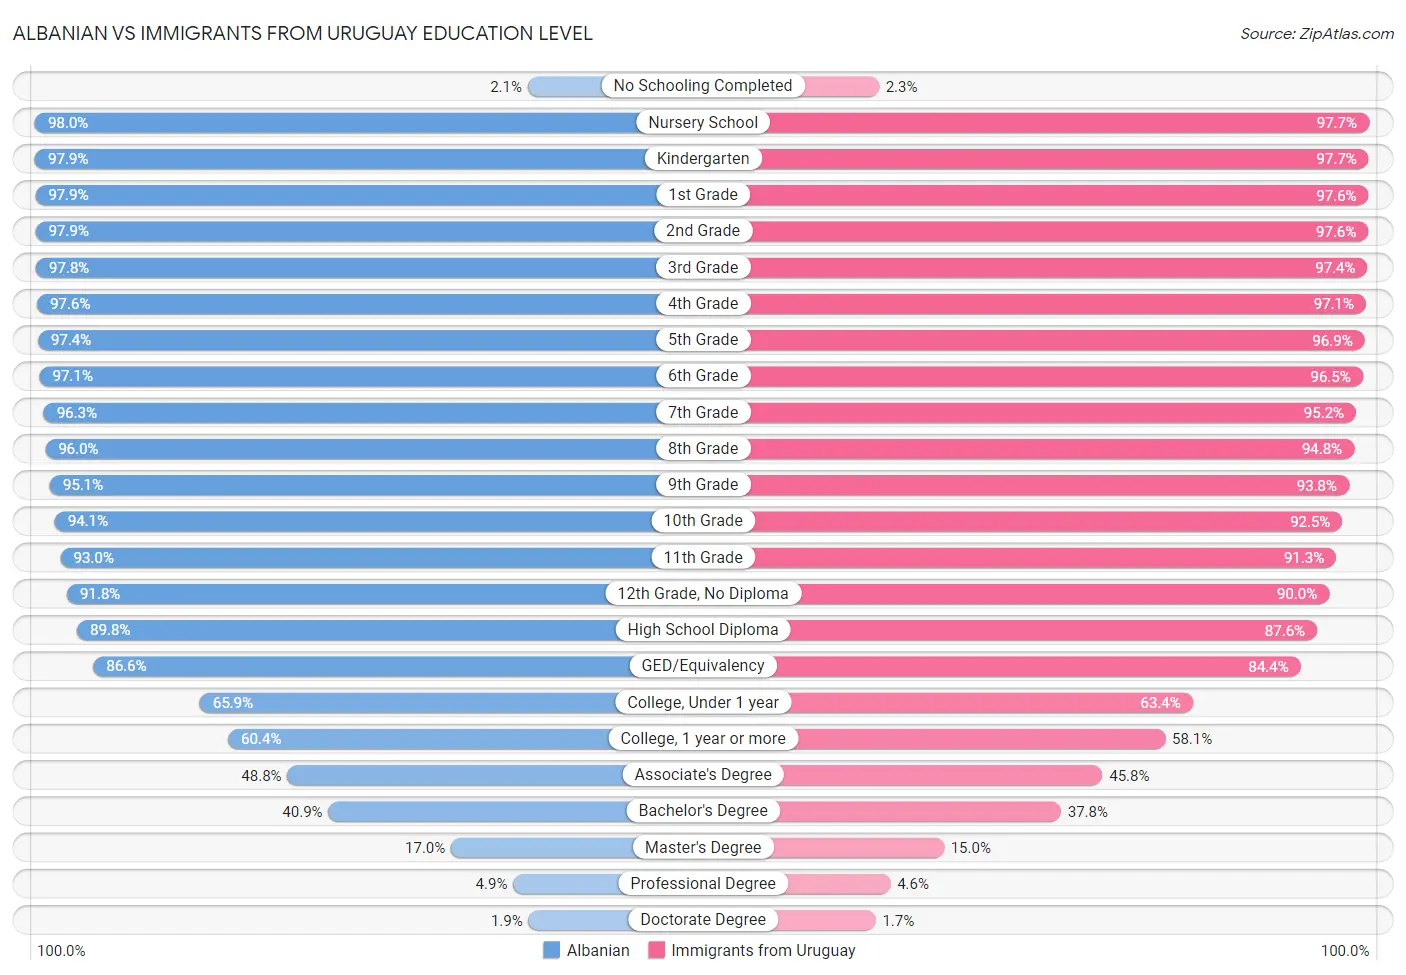 Albanian vs Immigrants from Uruguay Education Level